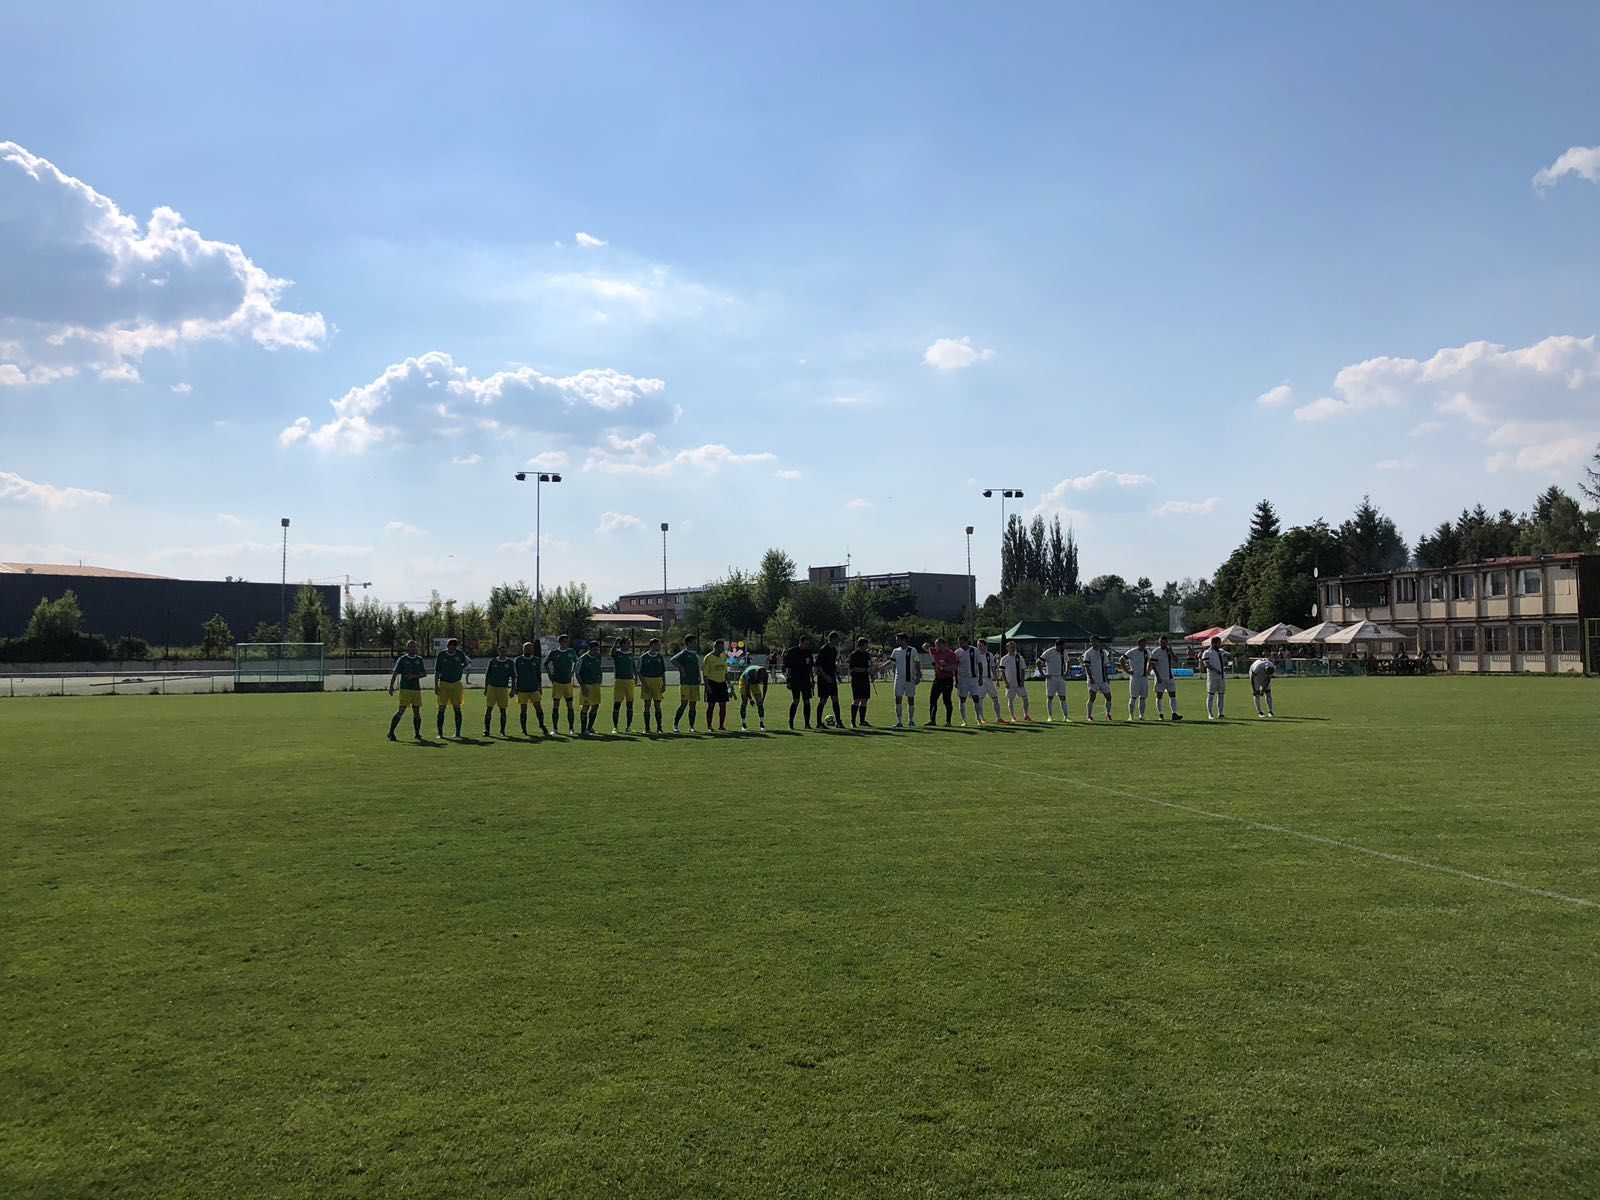 Spartak Kbely - SC Xaverov Jaro 2018